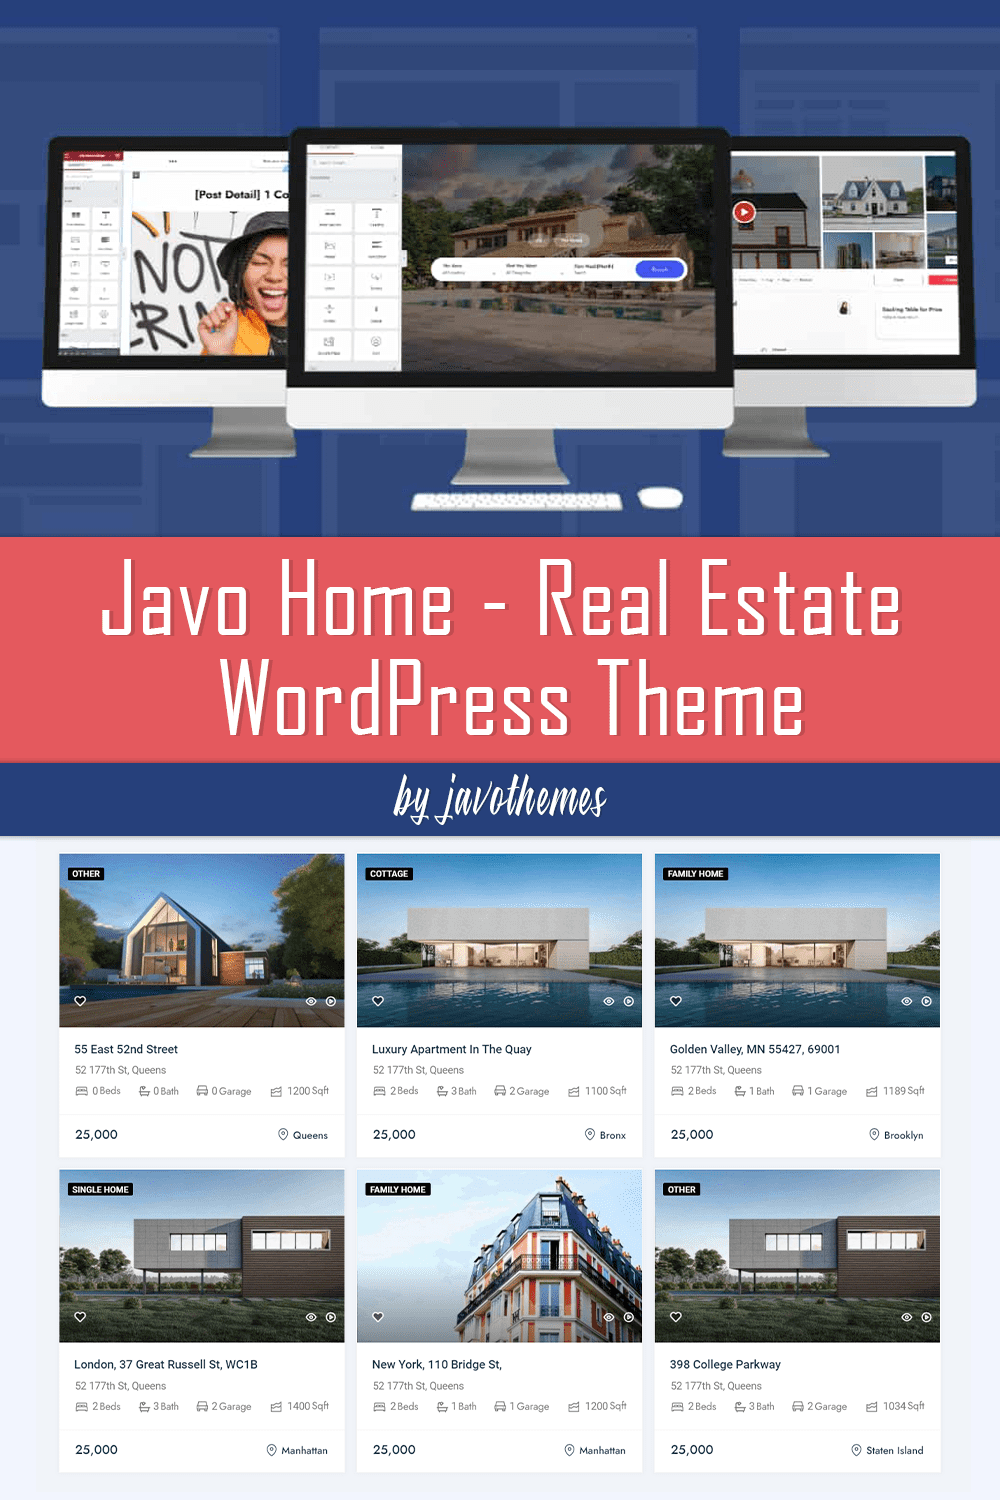 javo home real estate wordpress theme pinterest 272